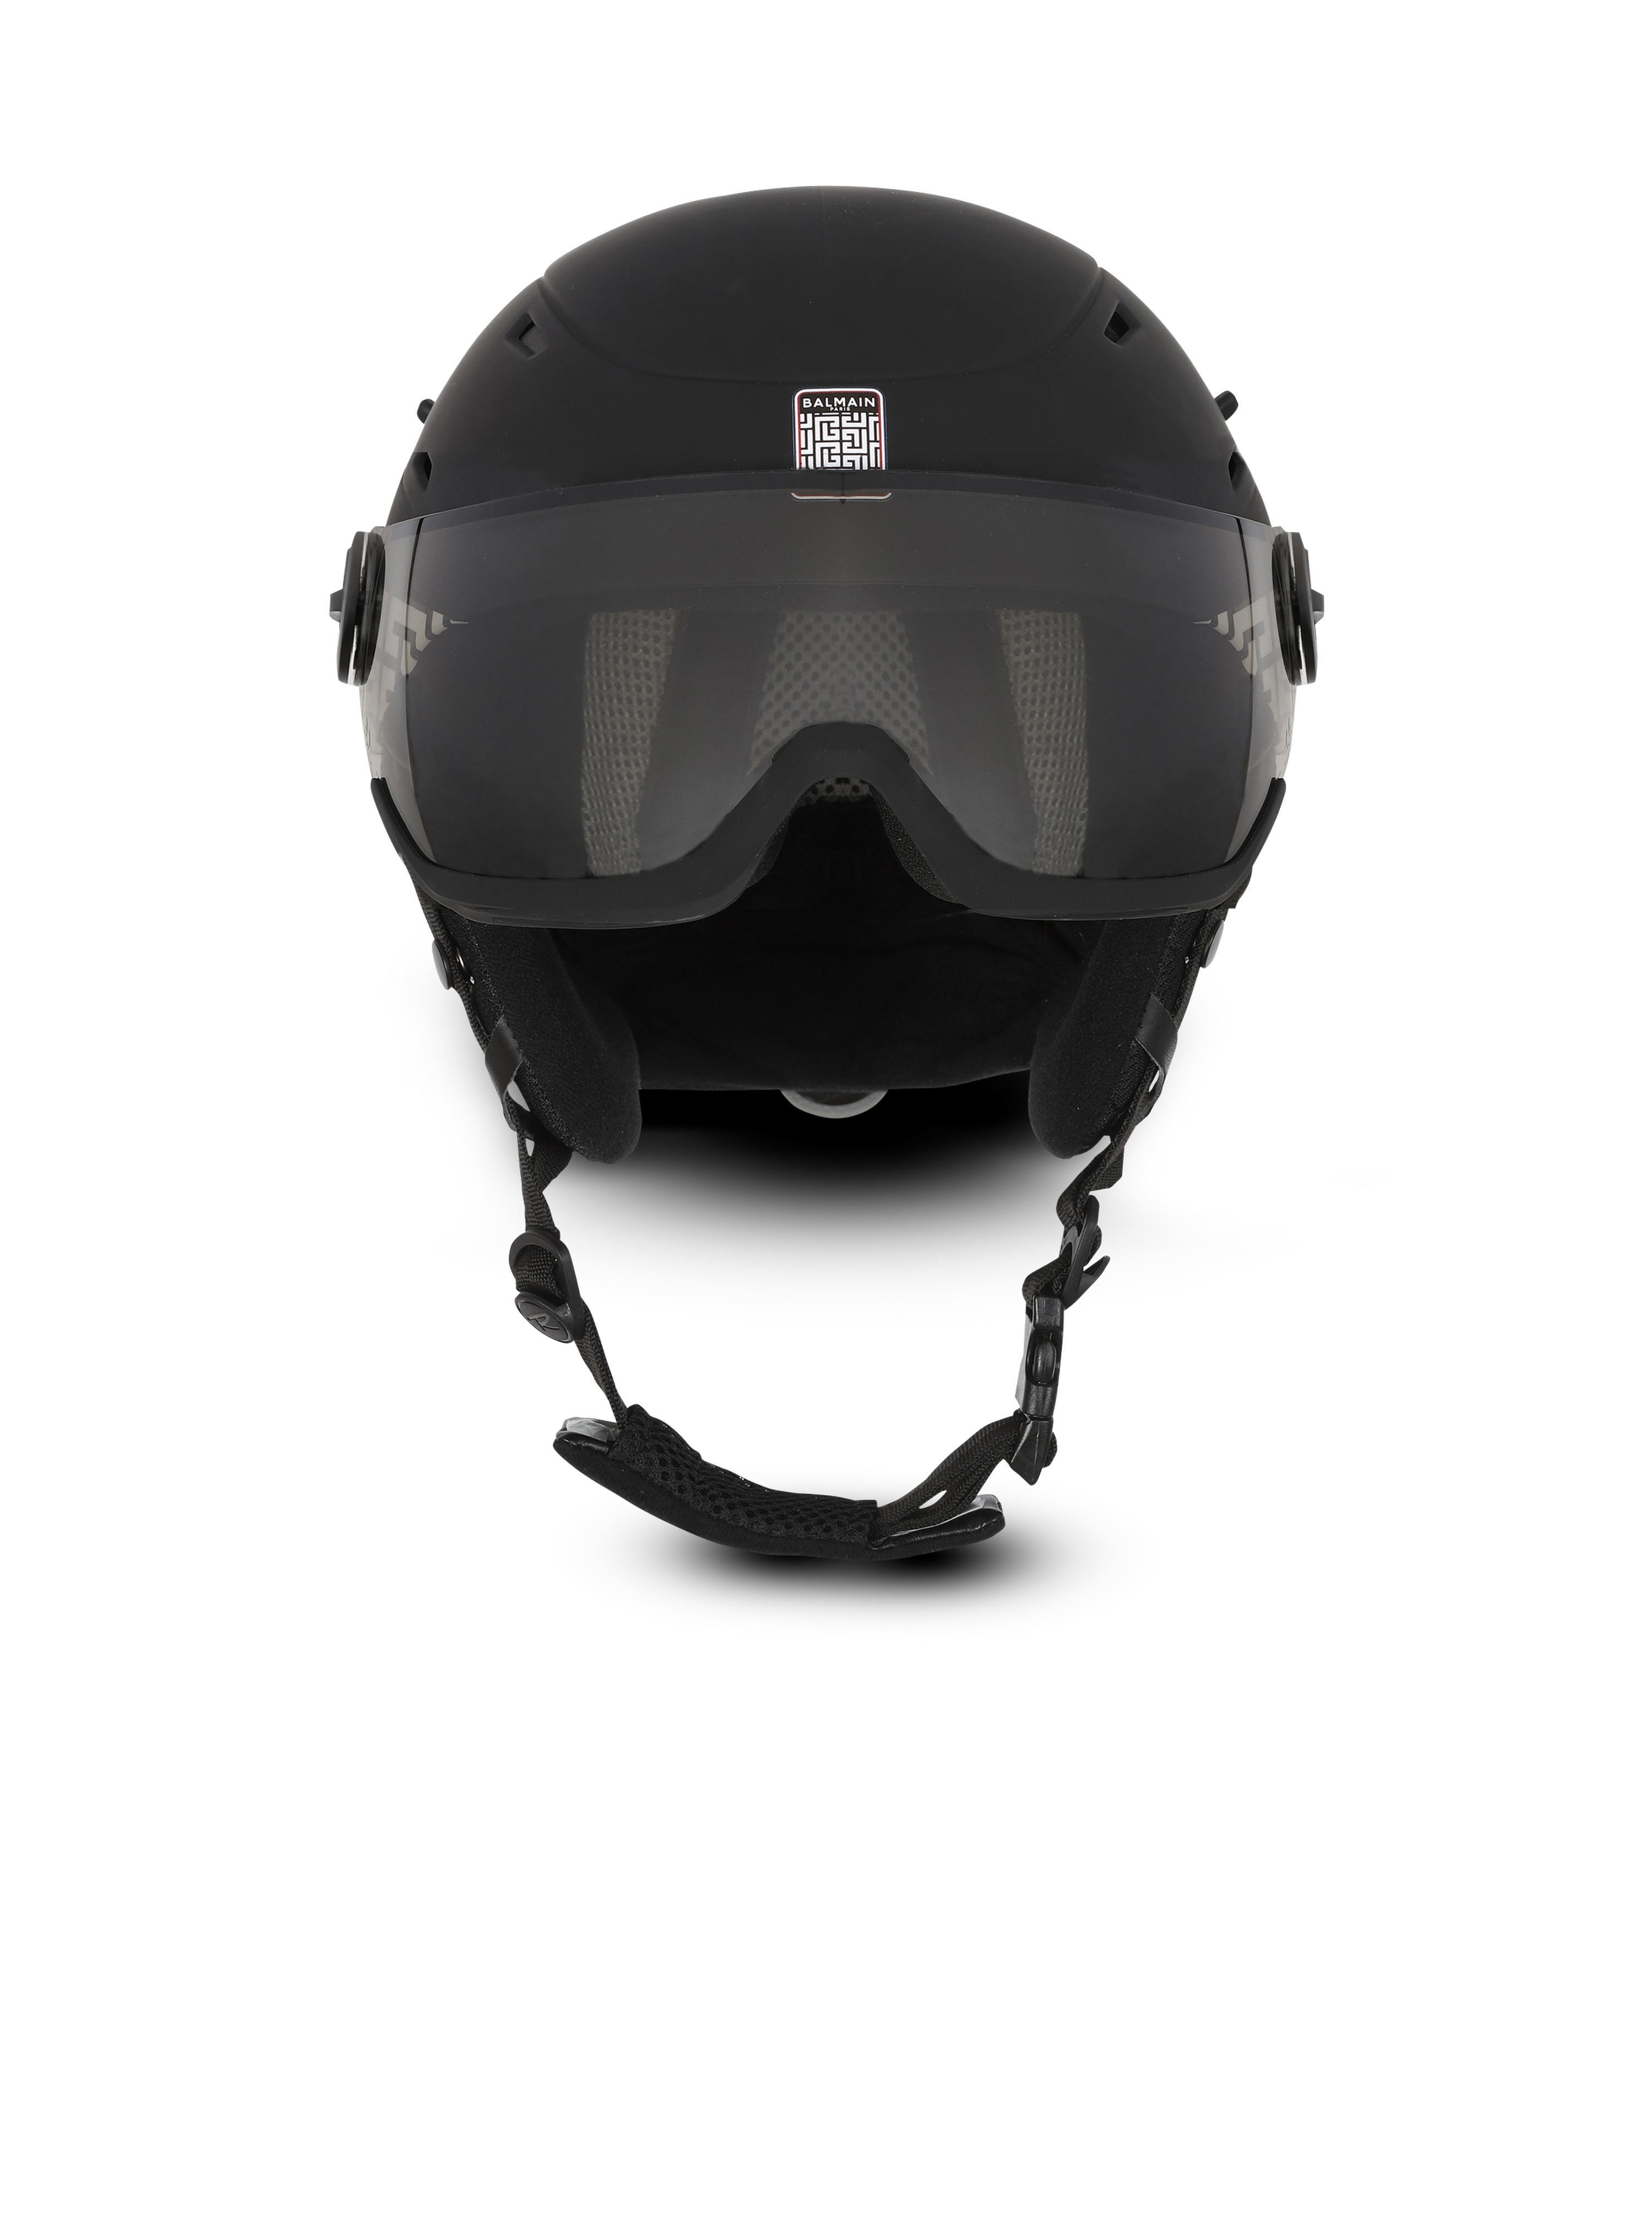 Balmain x Rossignol - Rossignol ski helmet with Balmain monogram in ivory and black, black